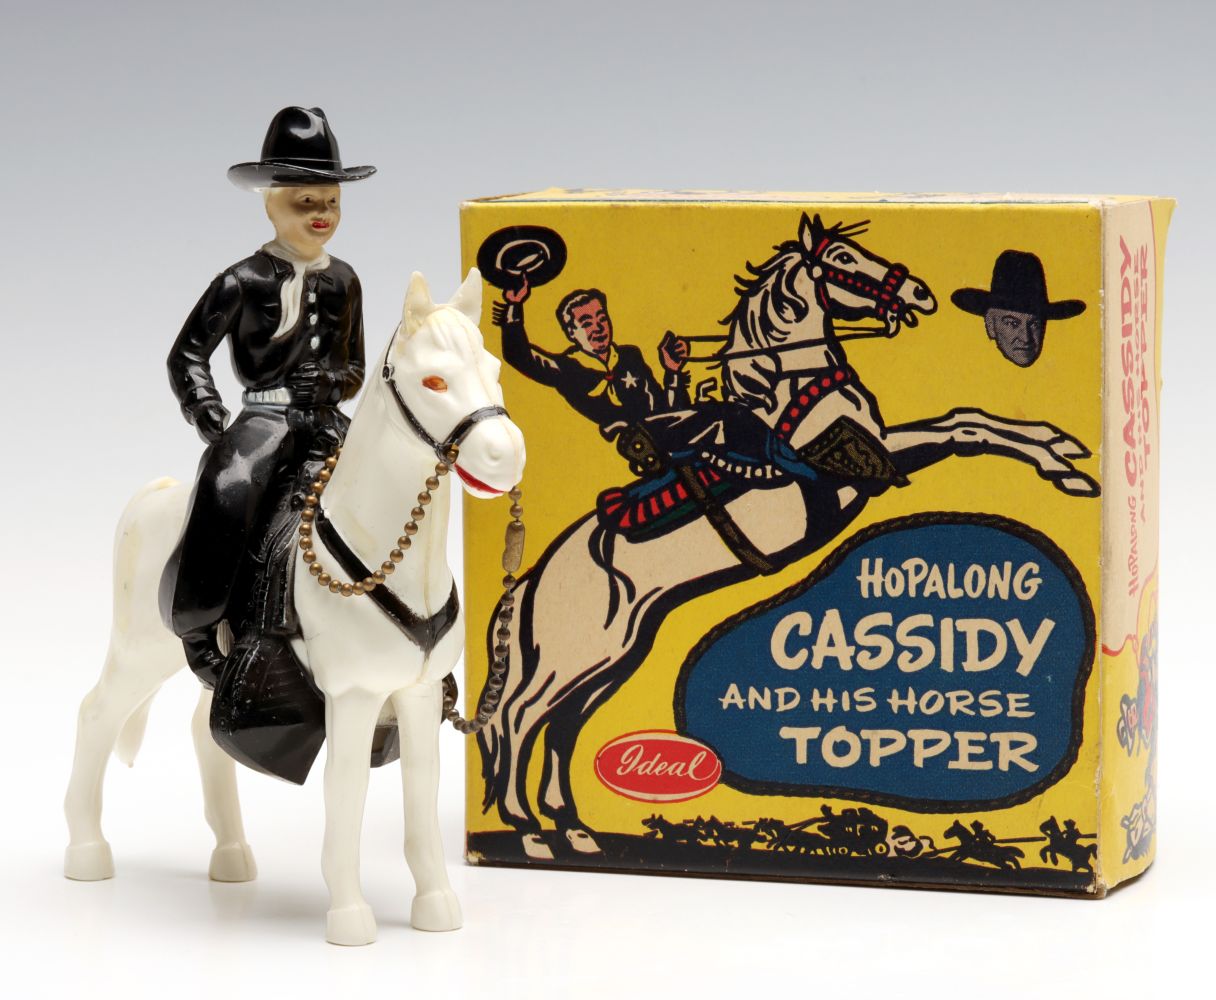 A HOPALONG CASSIDY AND TOPPER FIGURINE IN ORIGINAL BOX